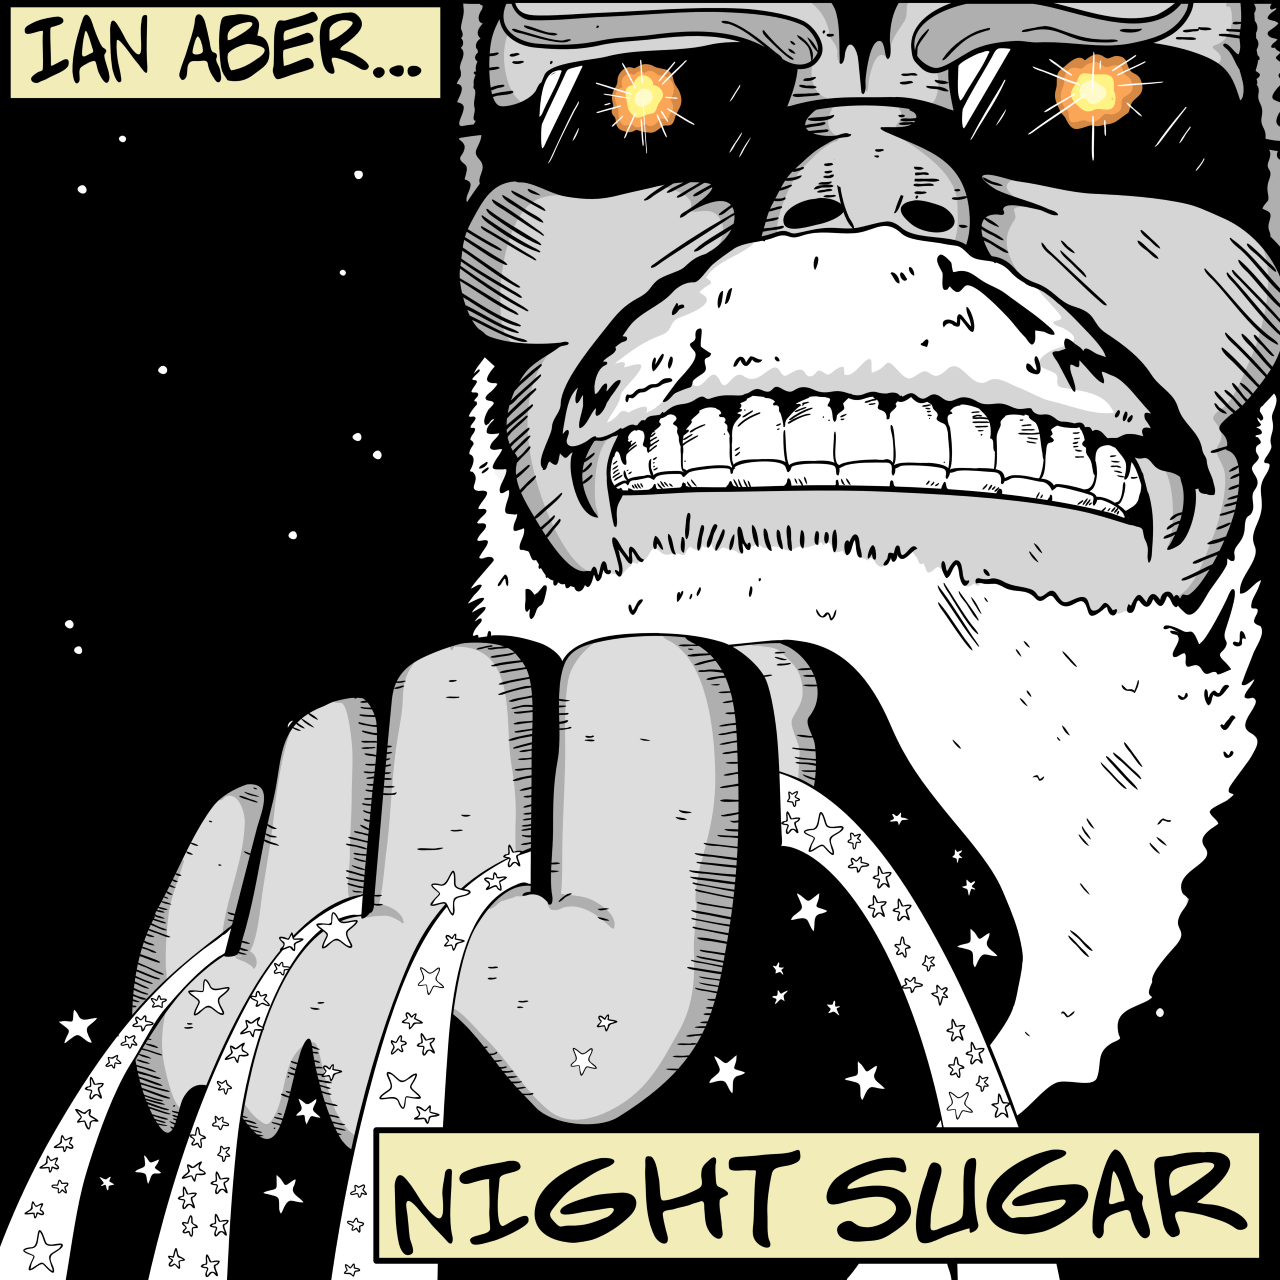 "Night Sugar" comedy album